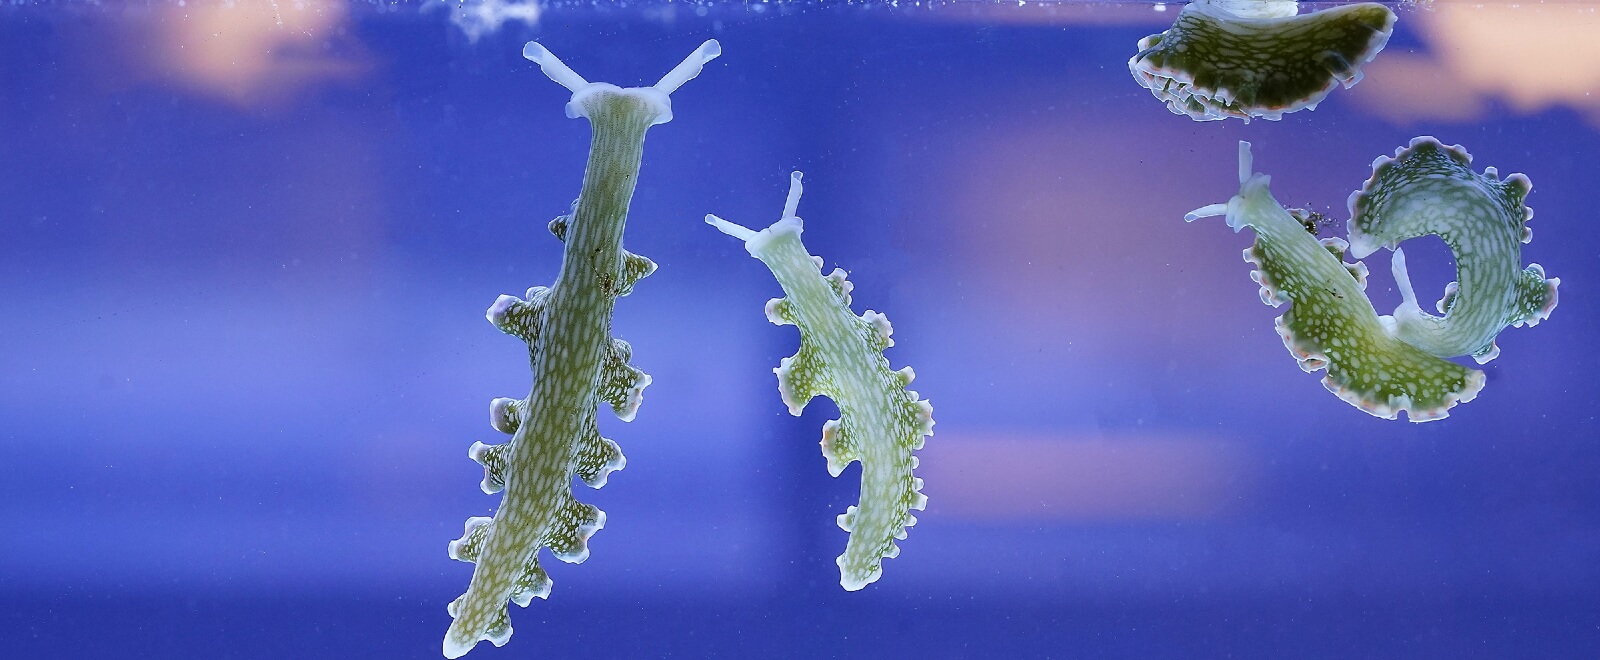 sea slugs climbing glass